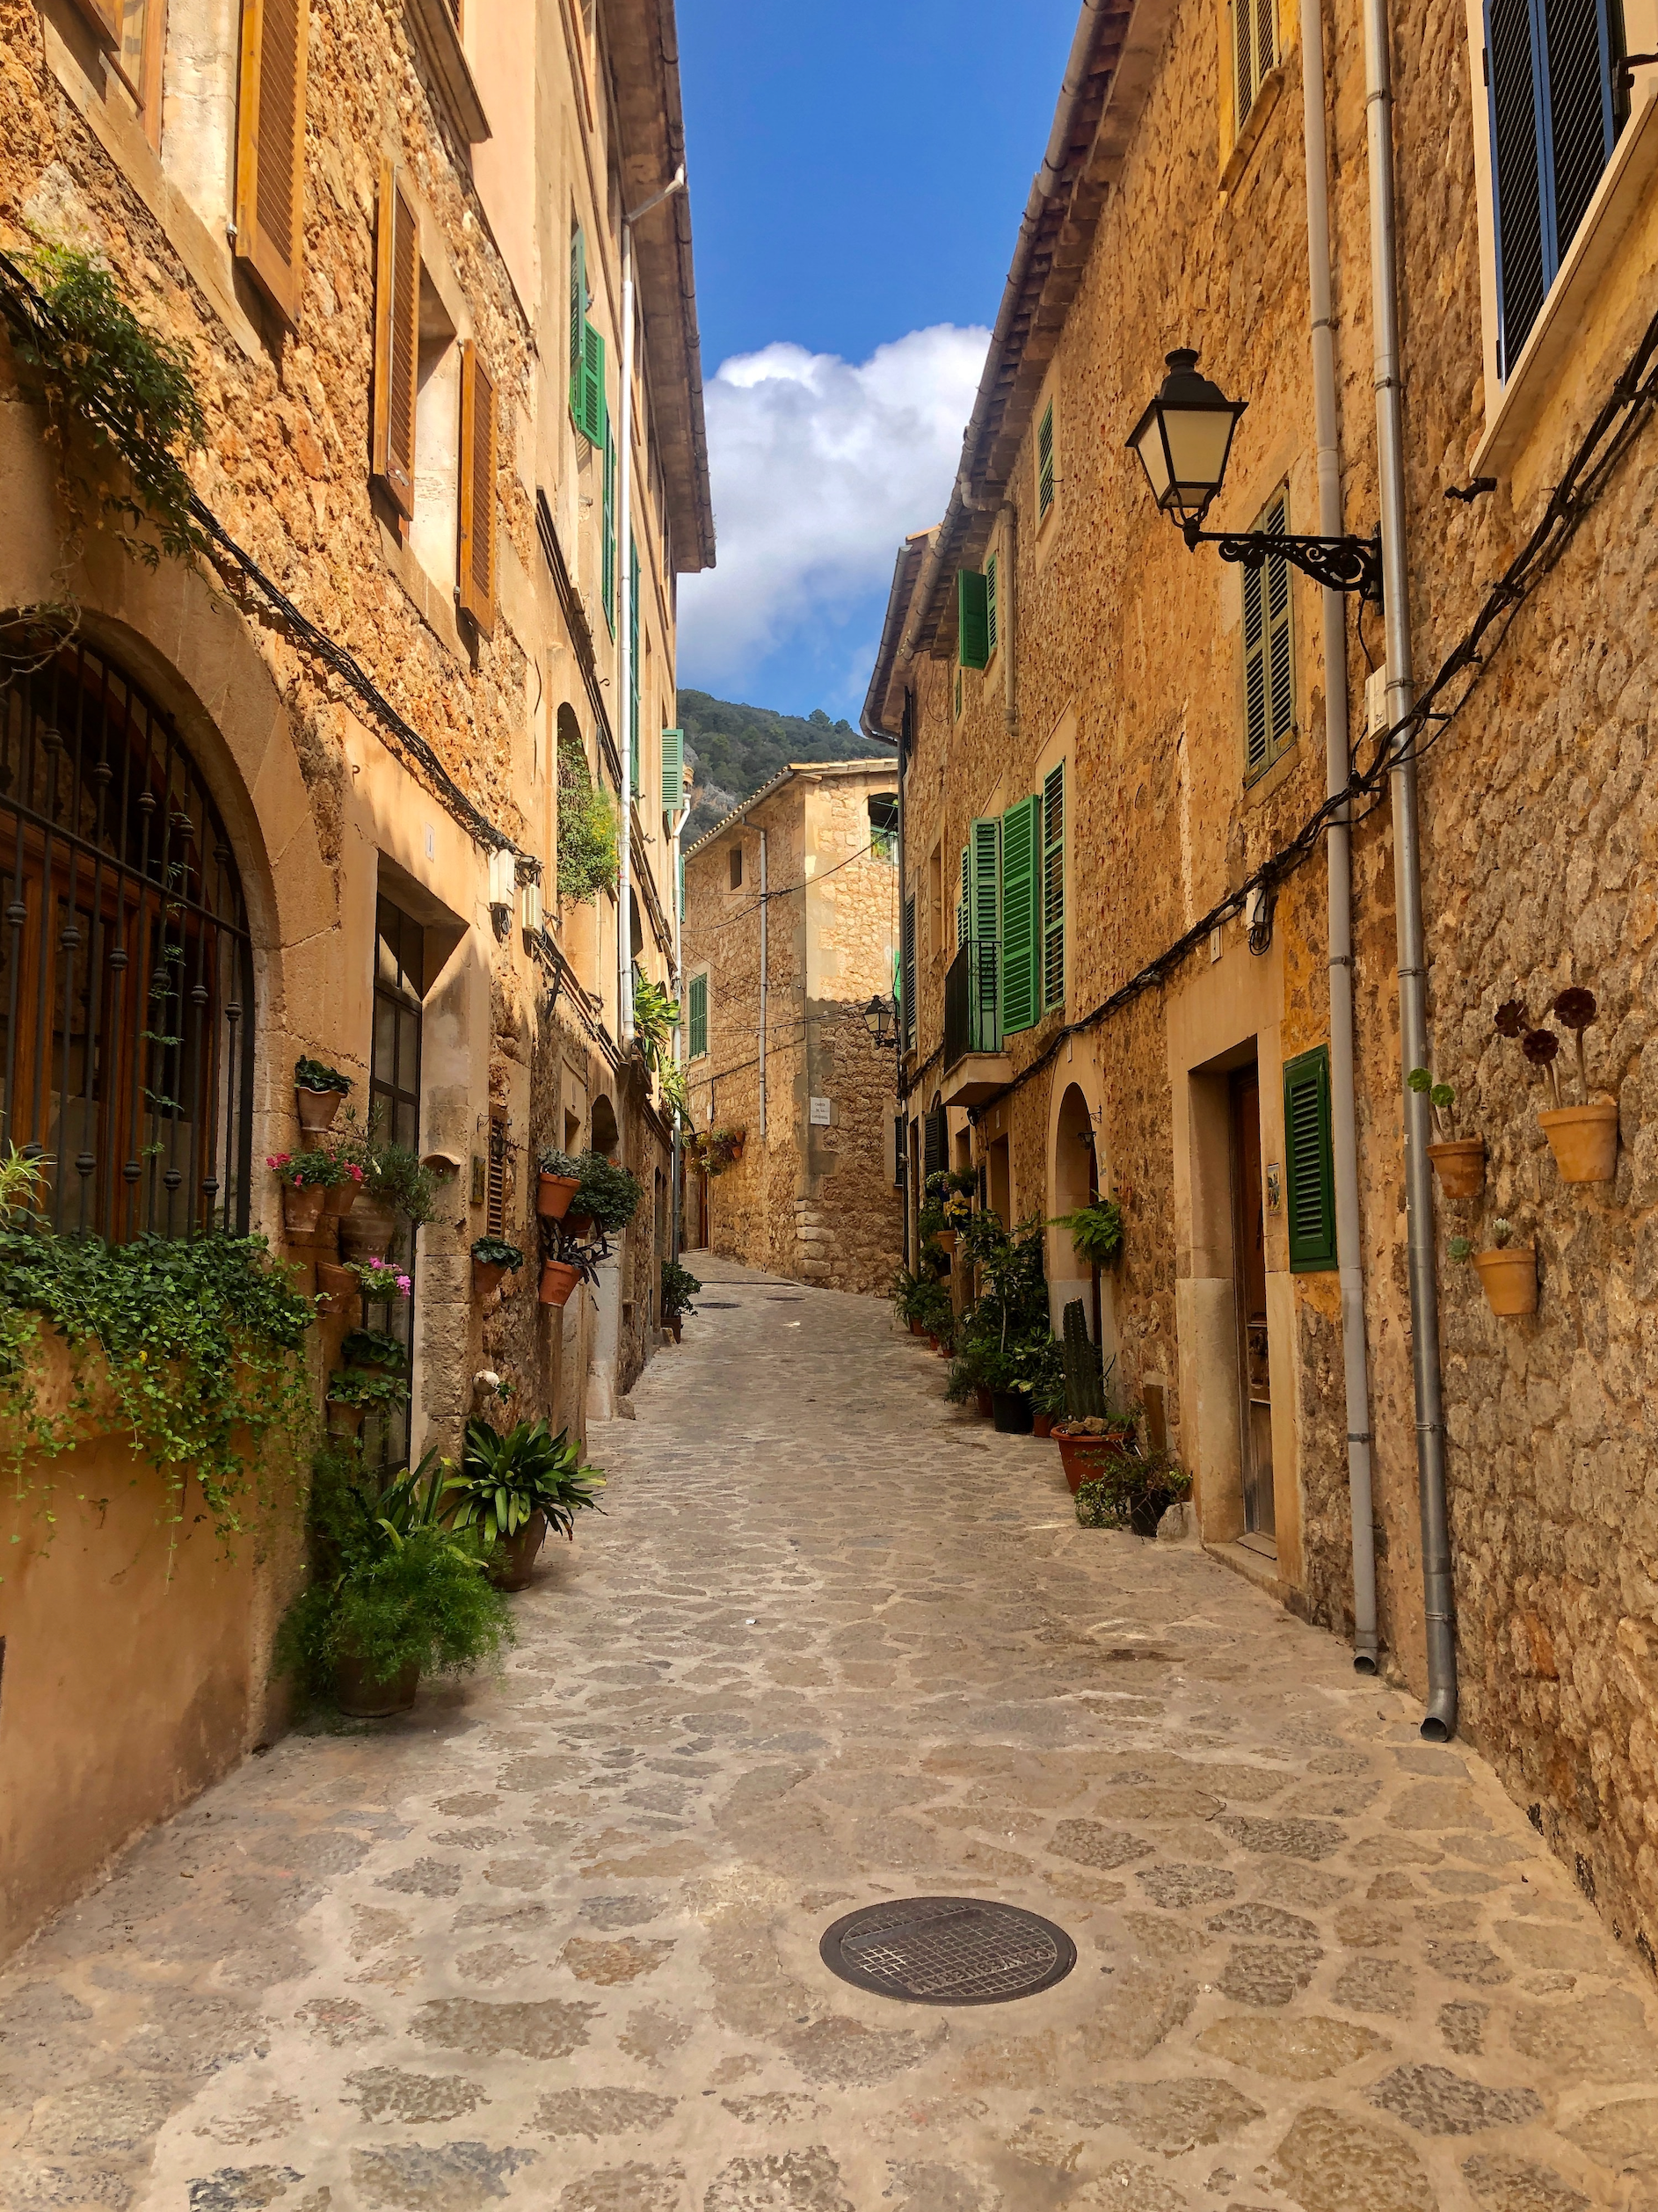 Mallorca Travel Guide and Trip Ideas